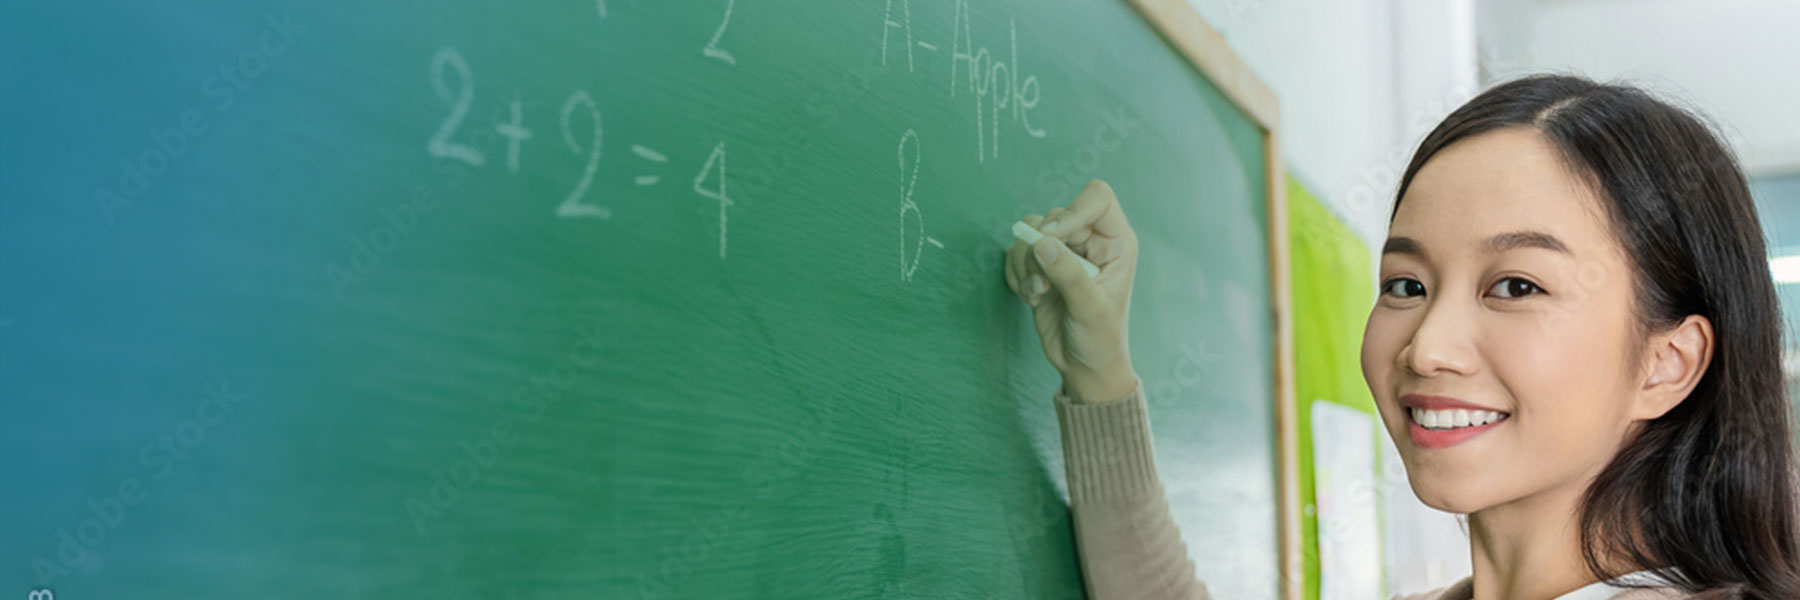 teacher writing on chalkboard 